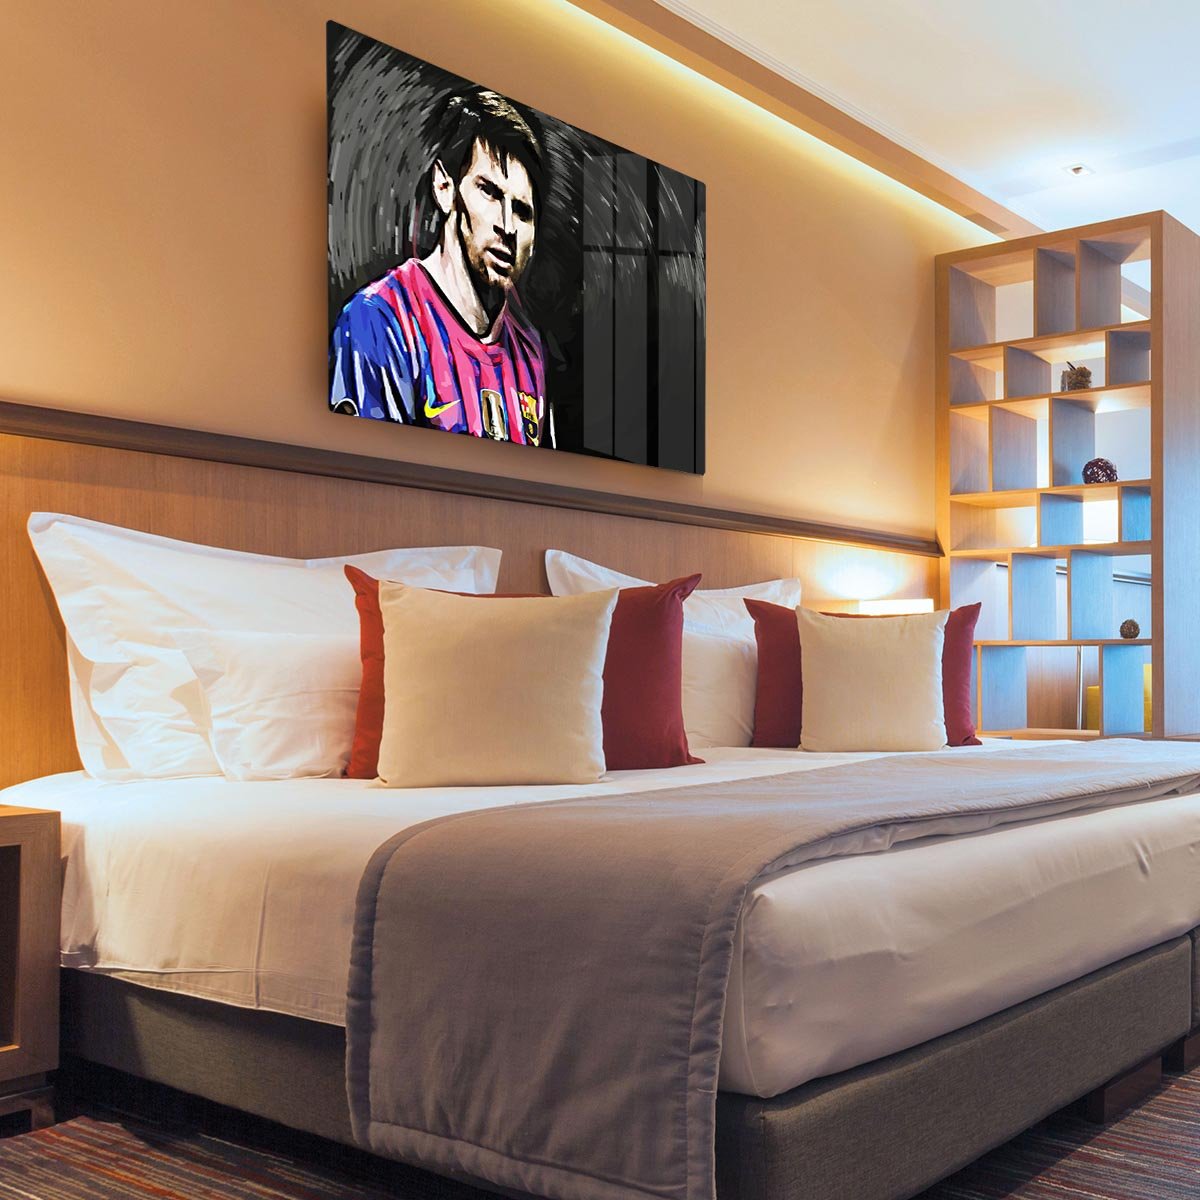 Lionel Messi Close Up HD Metal Print